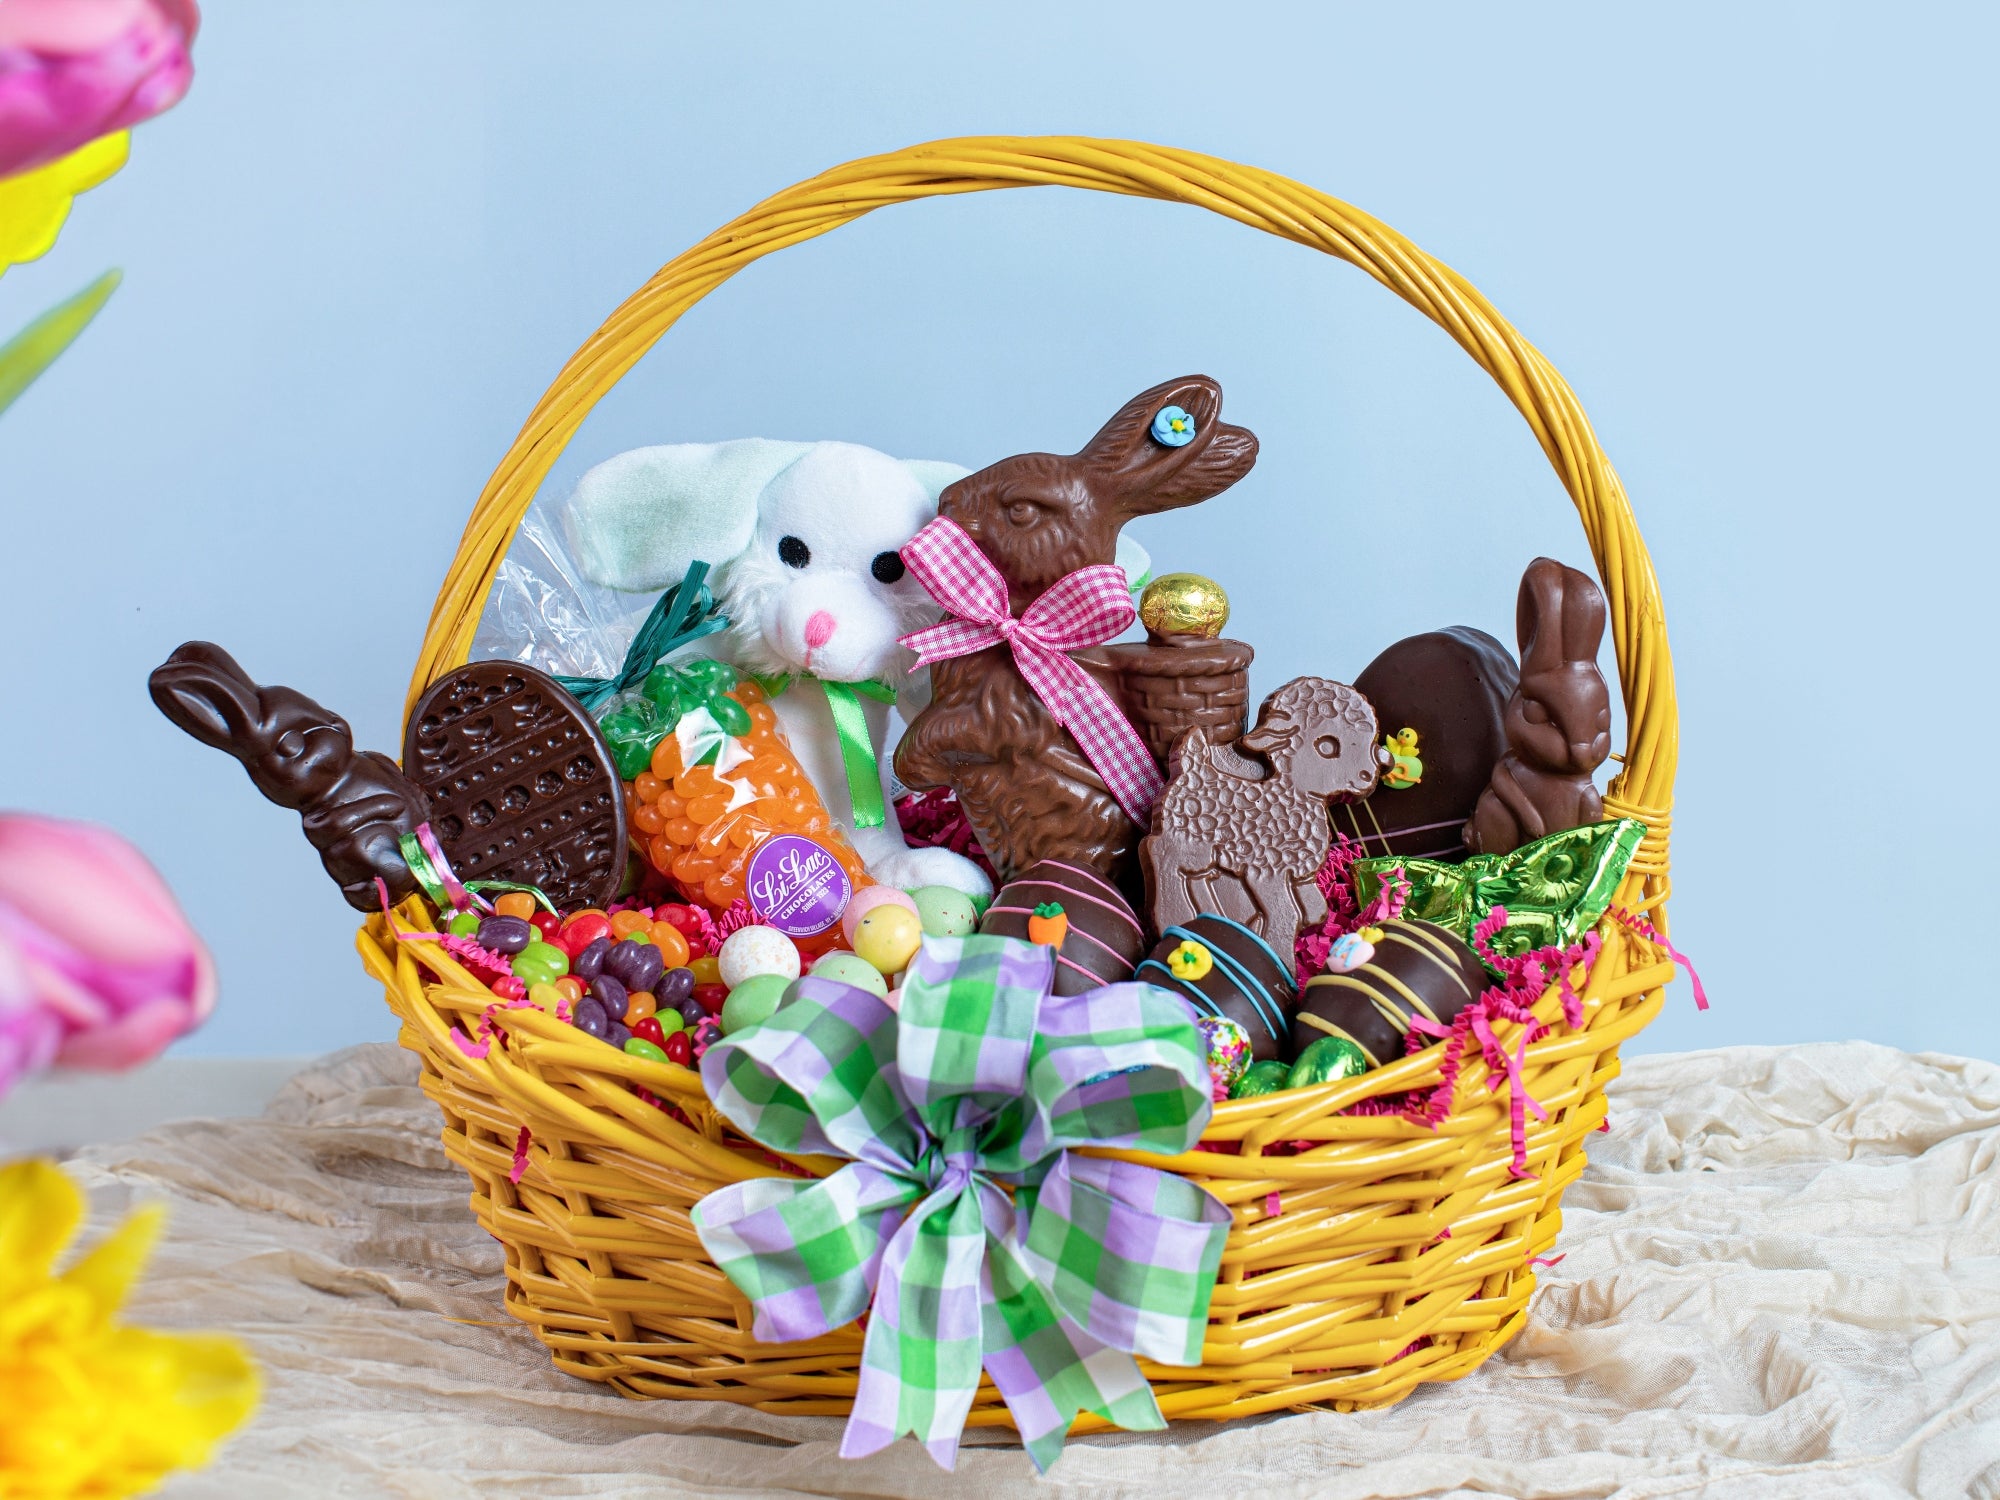 Jumbo Gourmet Chocolate Easter Basket